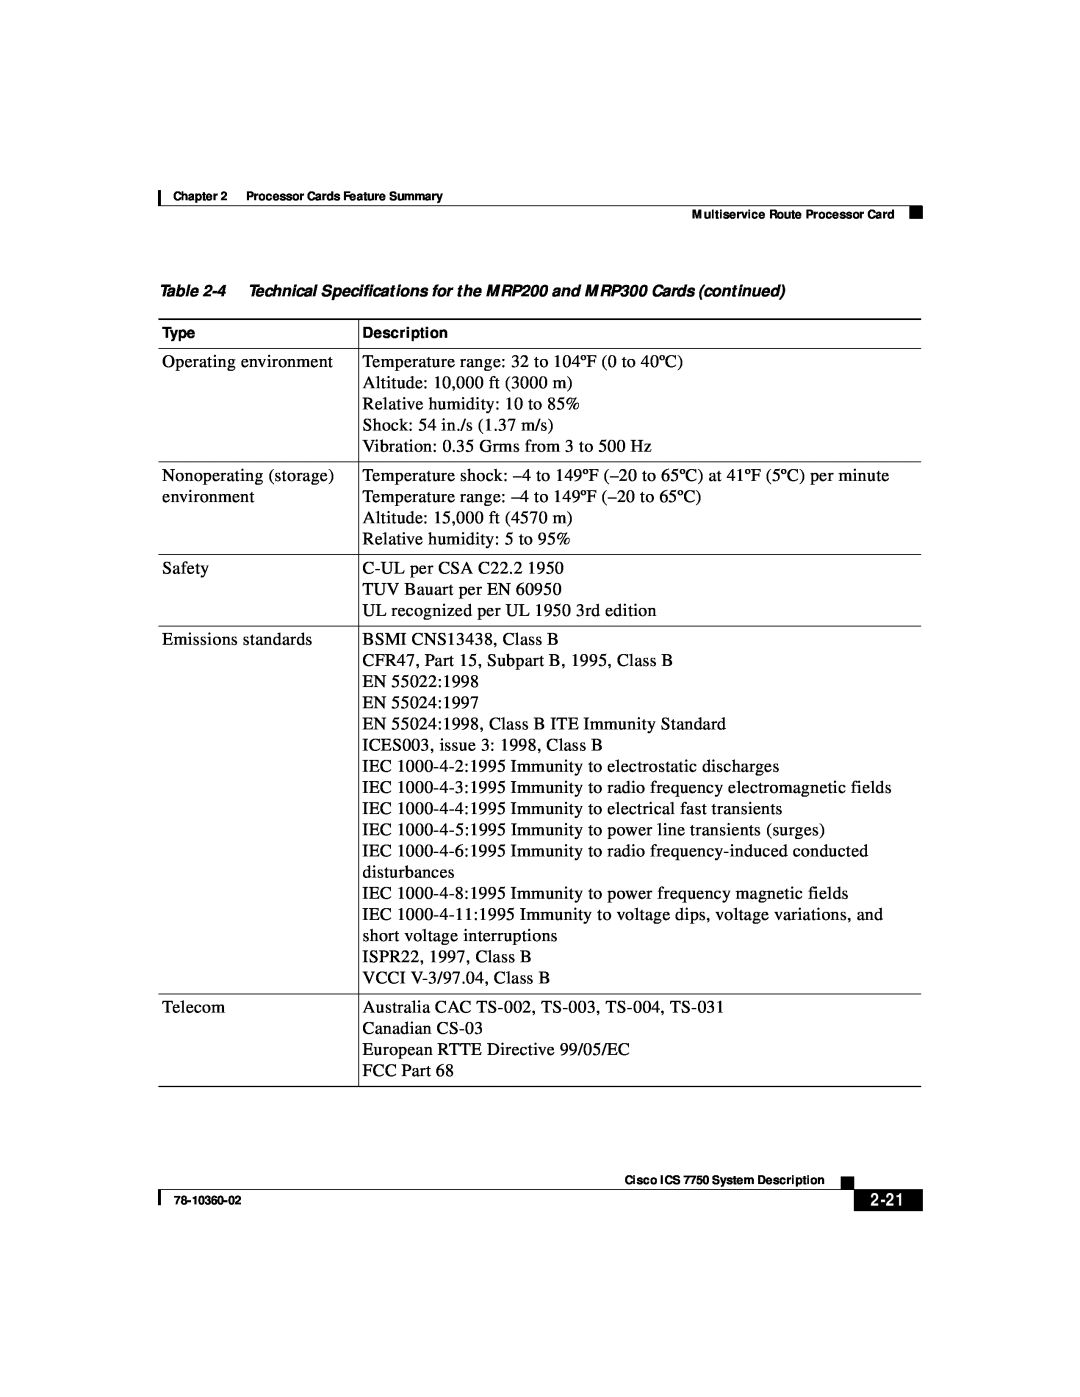 Cisco Systems ICS-7750 manual Type, Description, 2-21 